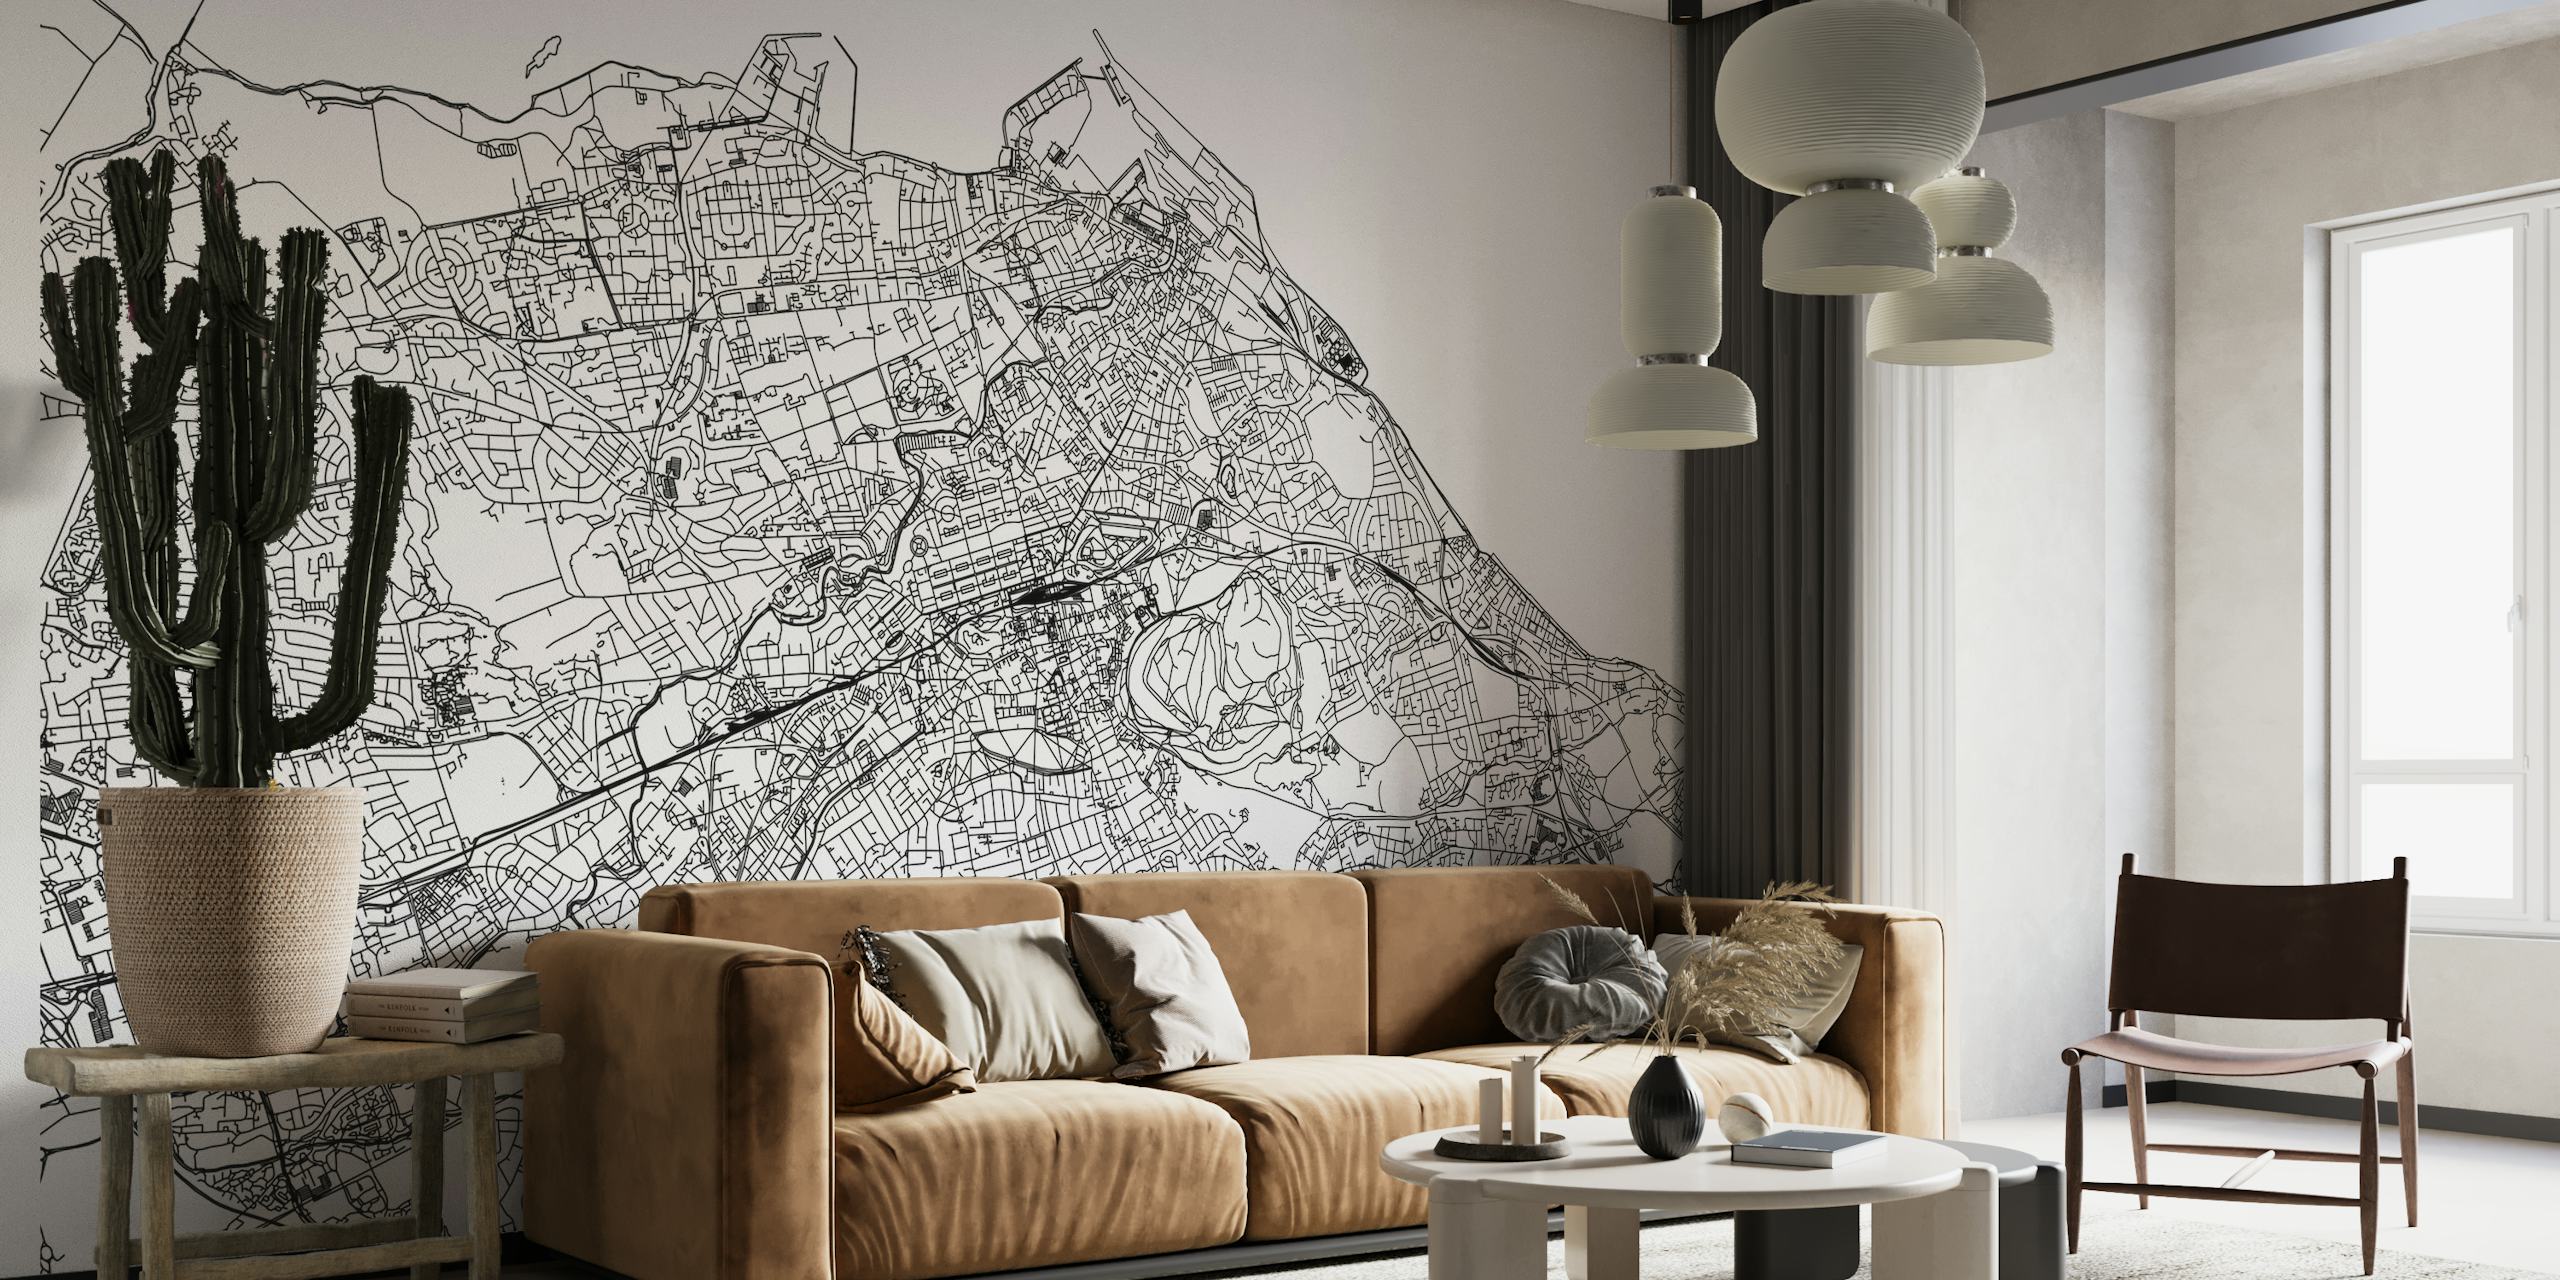 Detailed representation of Edinburgh on vintage-style map wallpaper